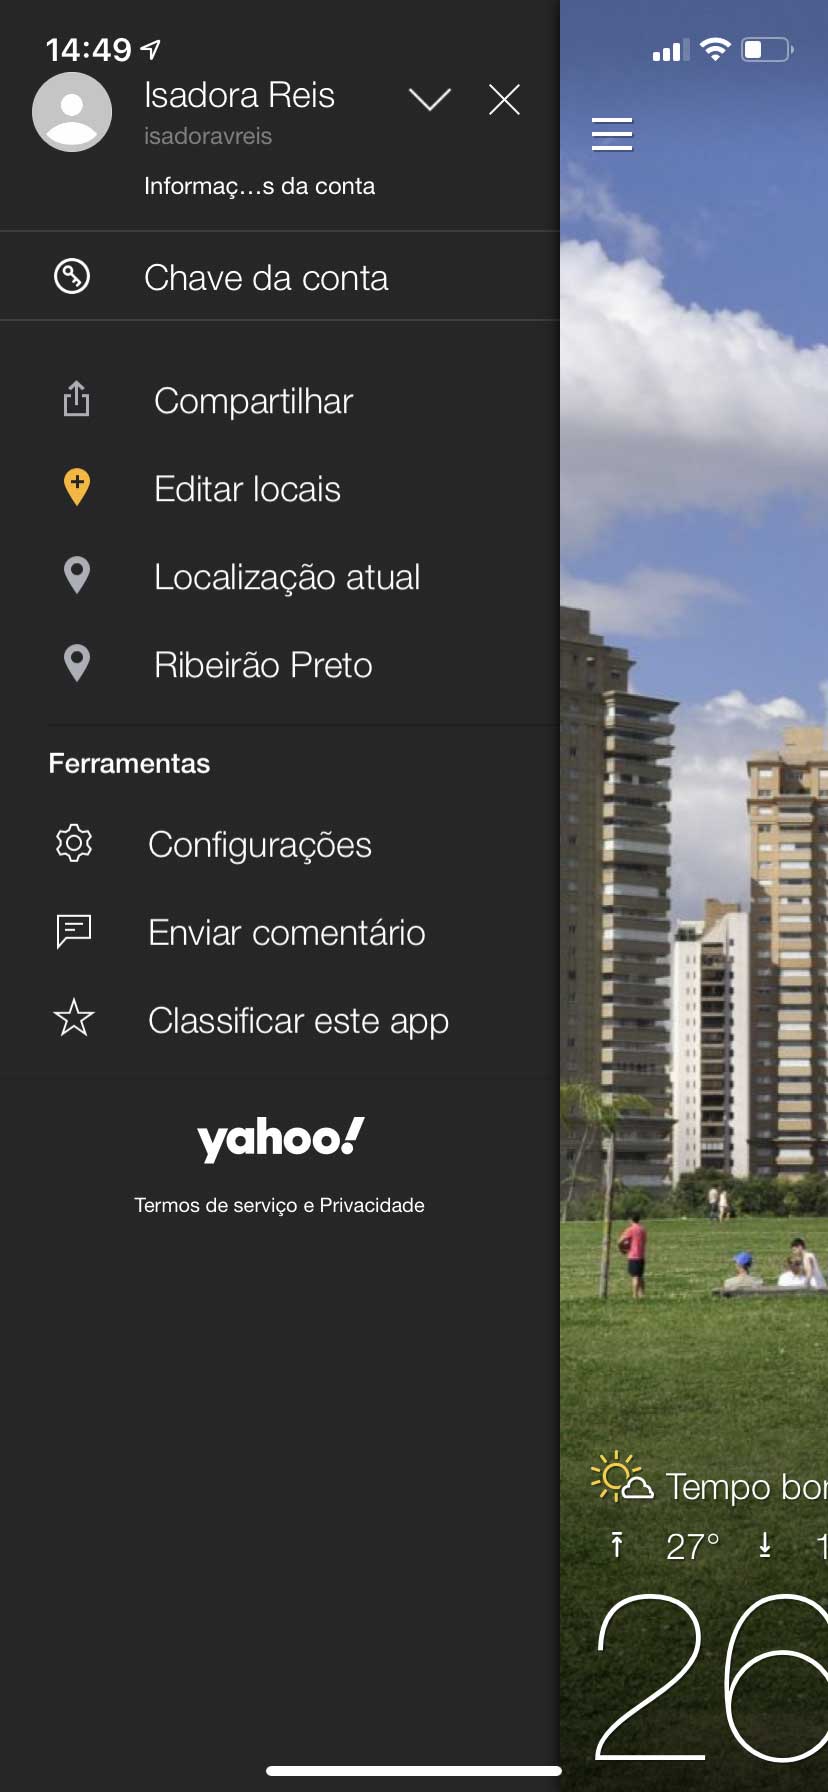 Yahoo! Mobile Yahoo and verizon are launching yahoo mobile phone service